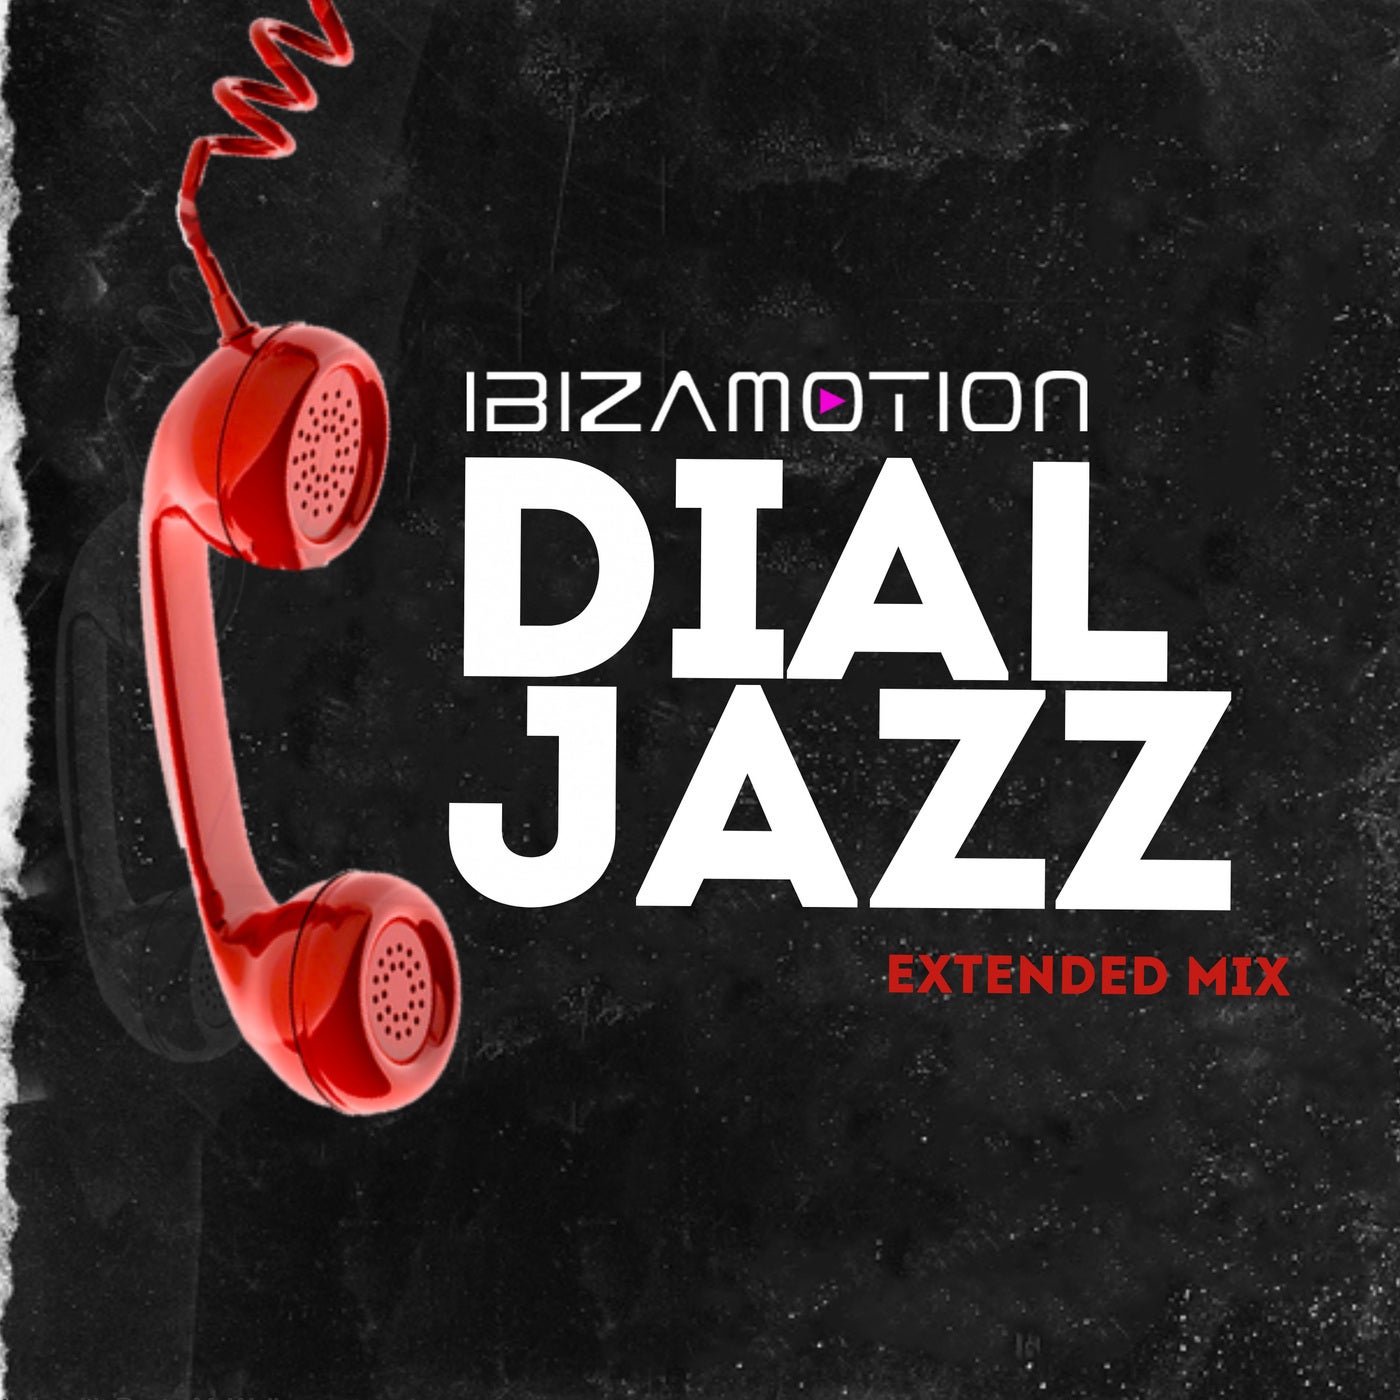 Dial Jazz